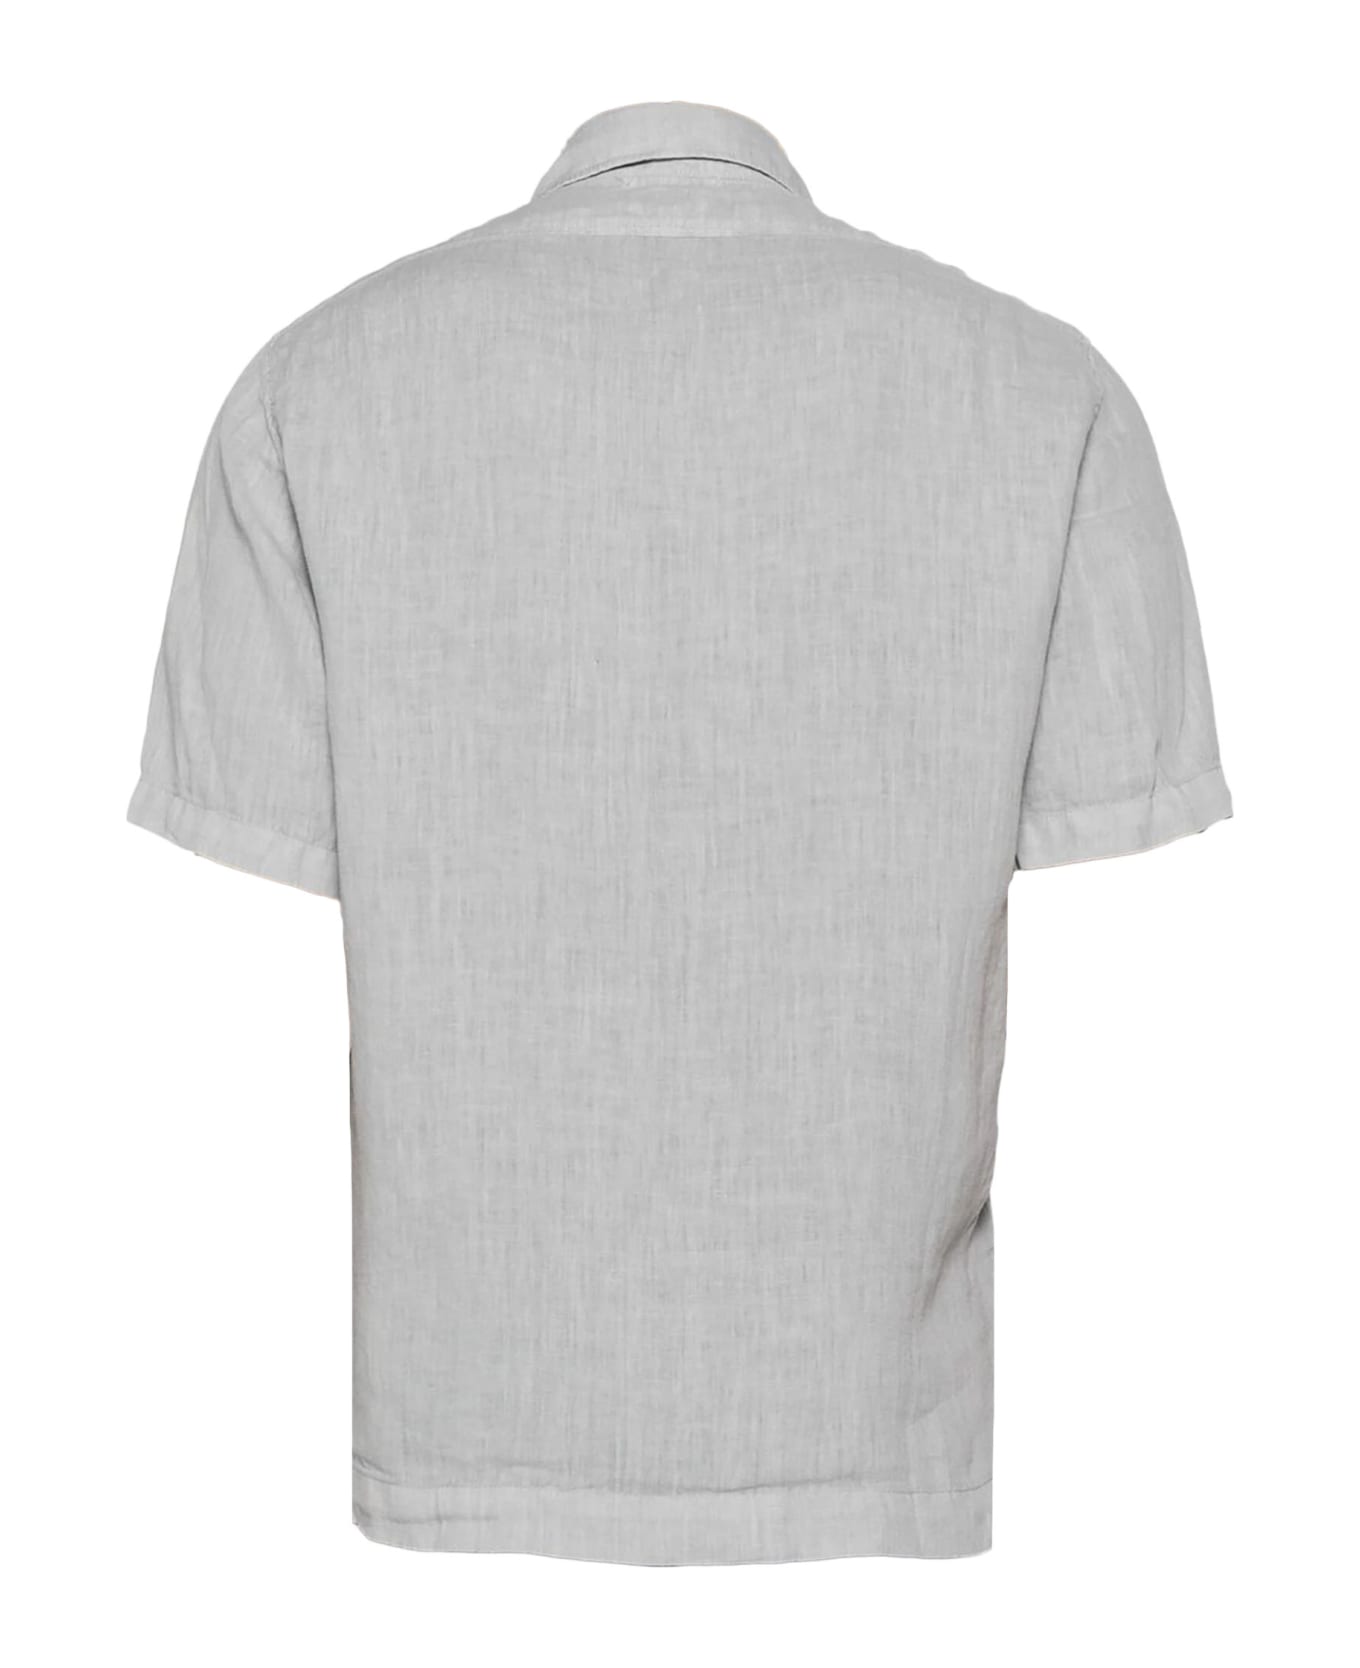 C.P. Company C.p.company Shirts Grey - Grey